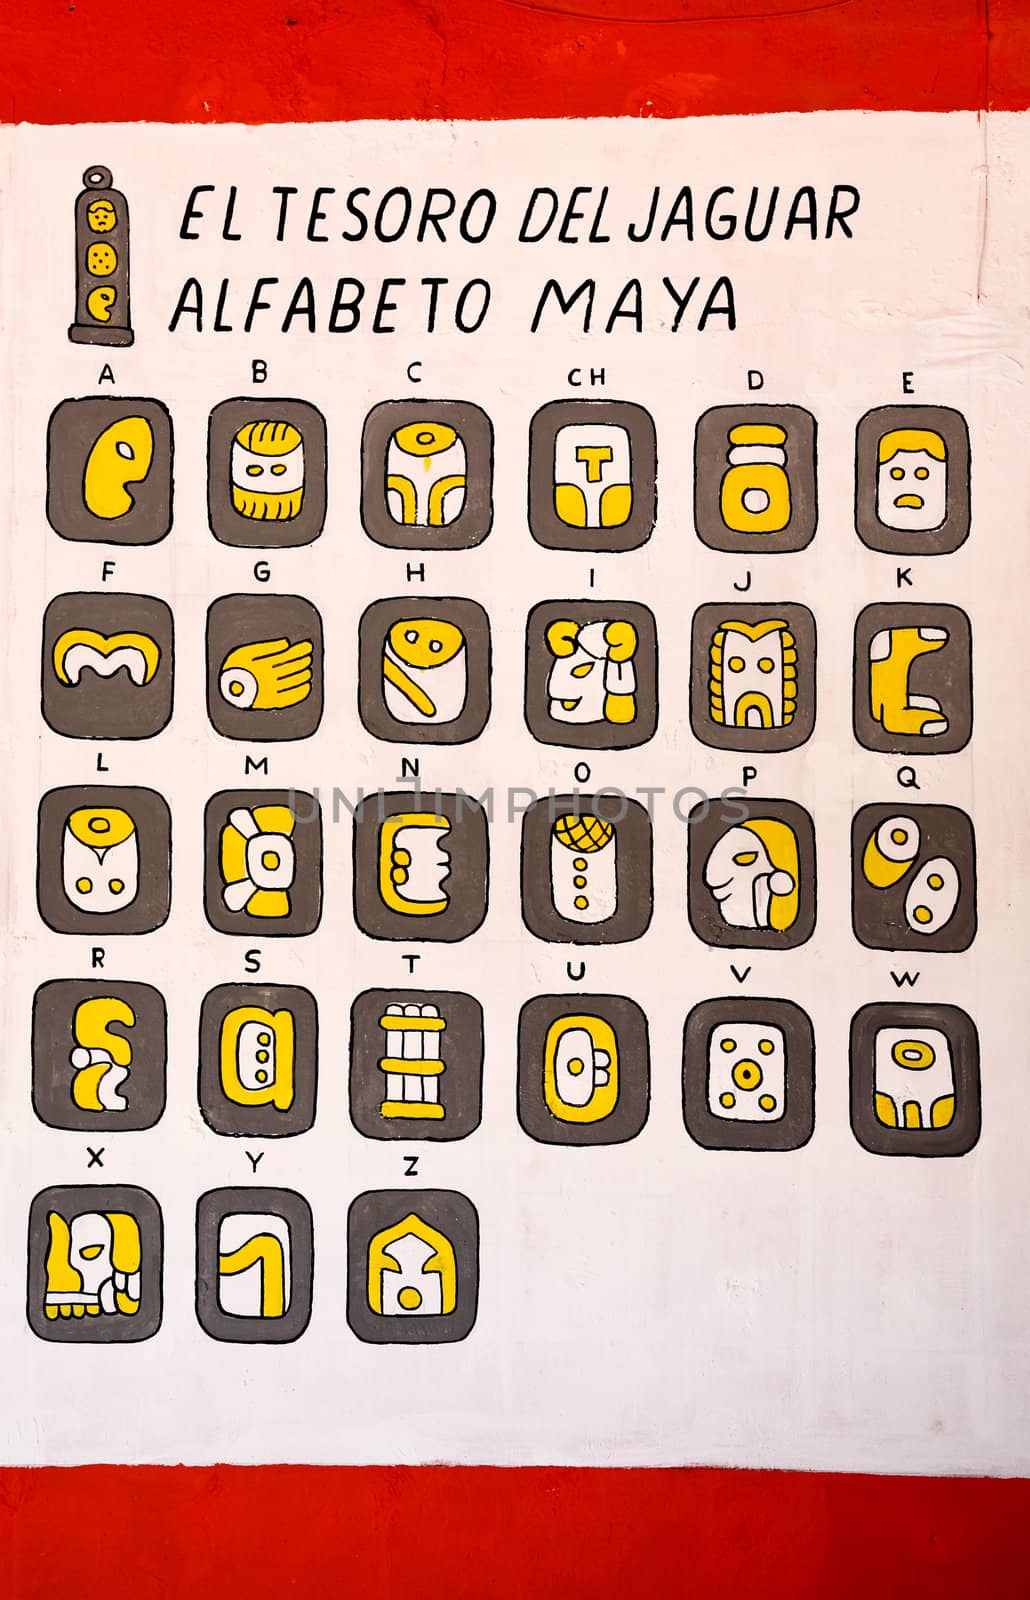 Mayan alphabets  by gary718